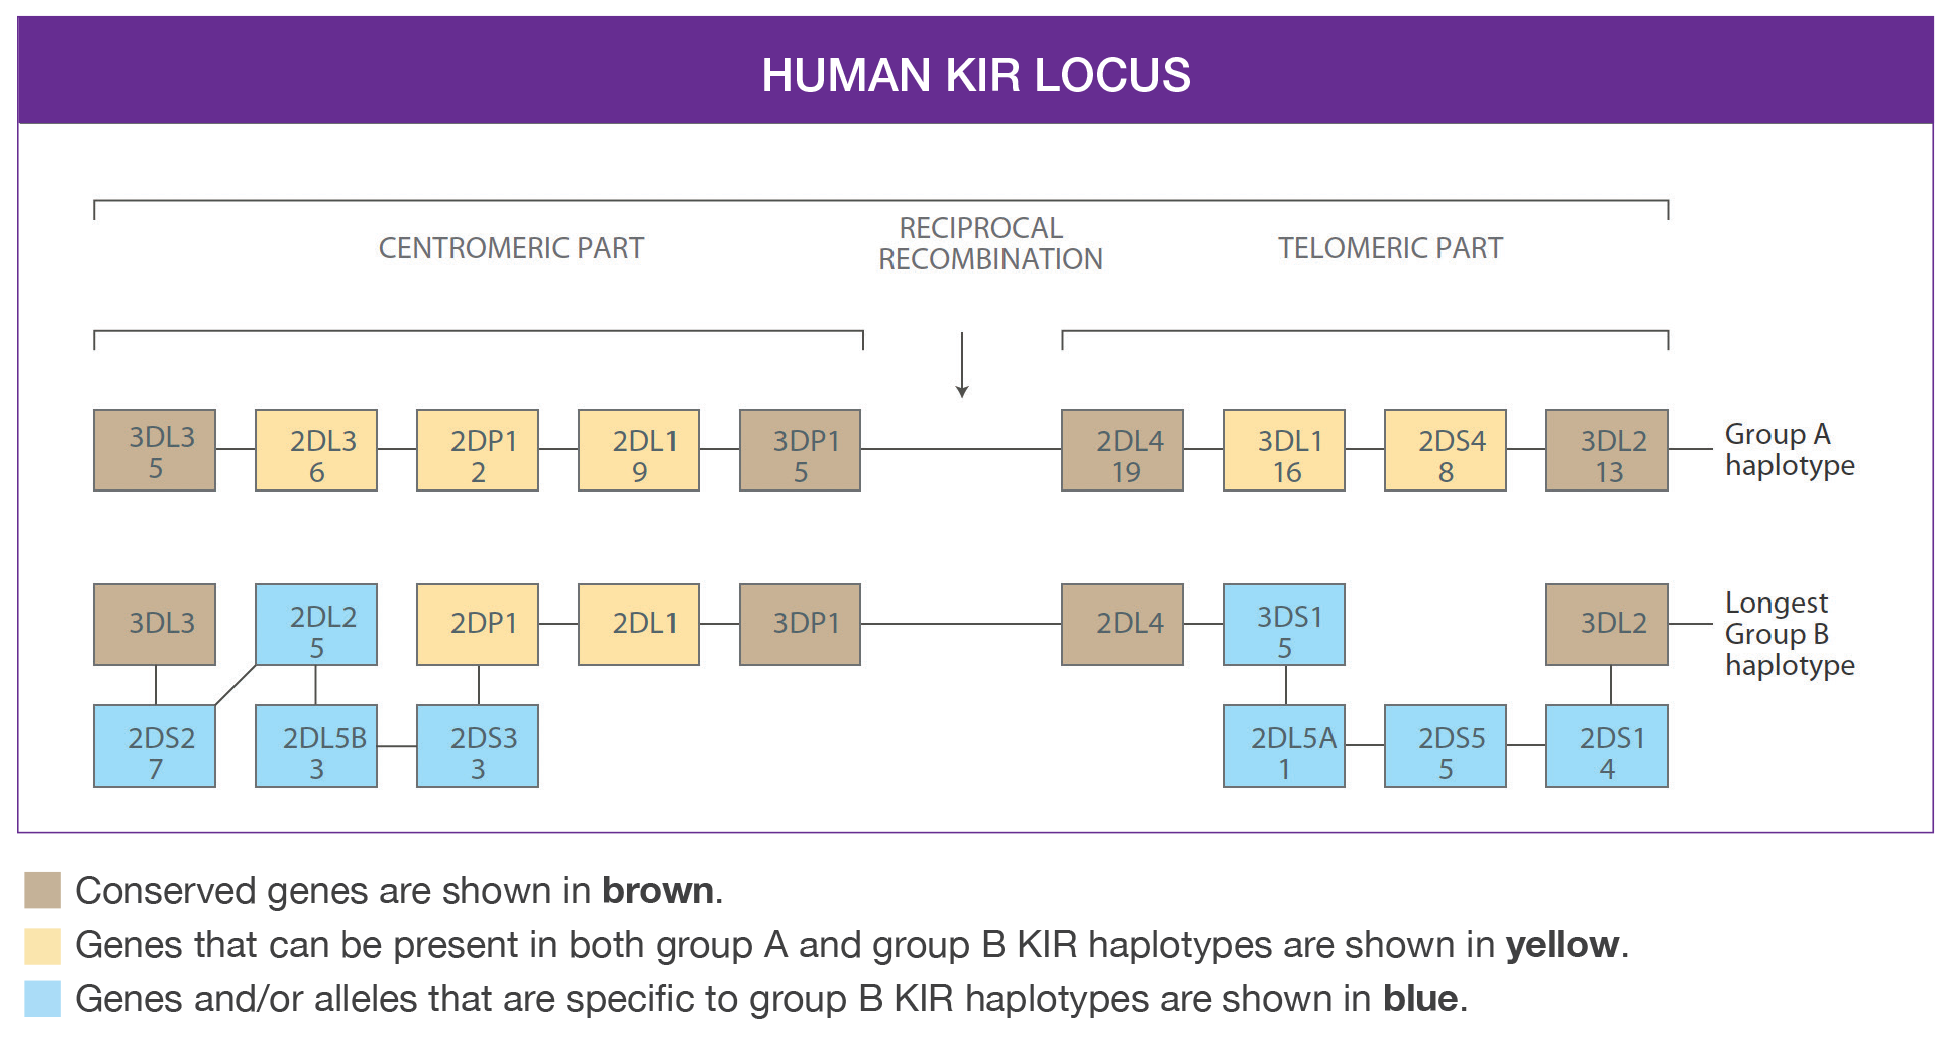 Human KIR locus